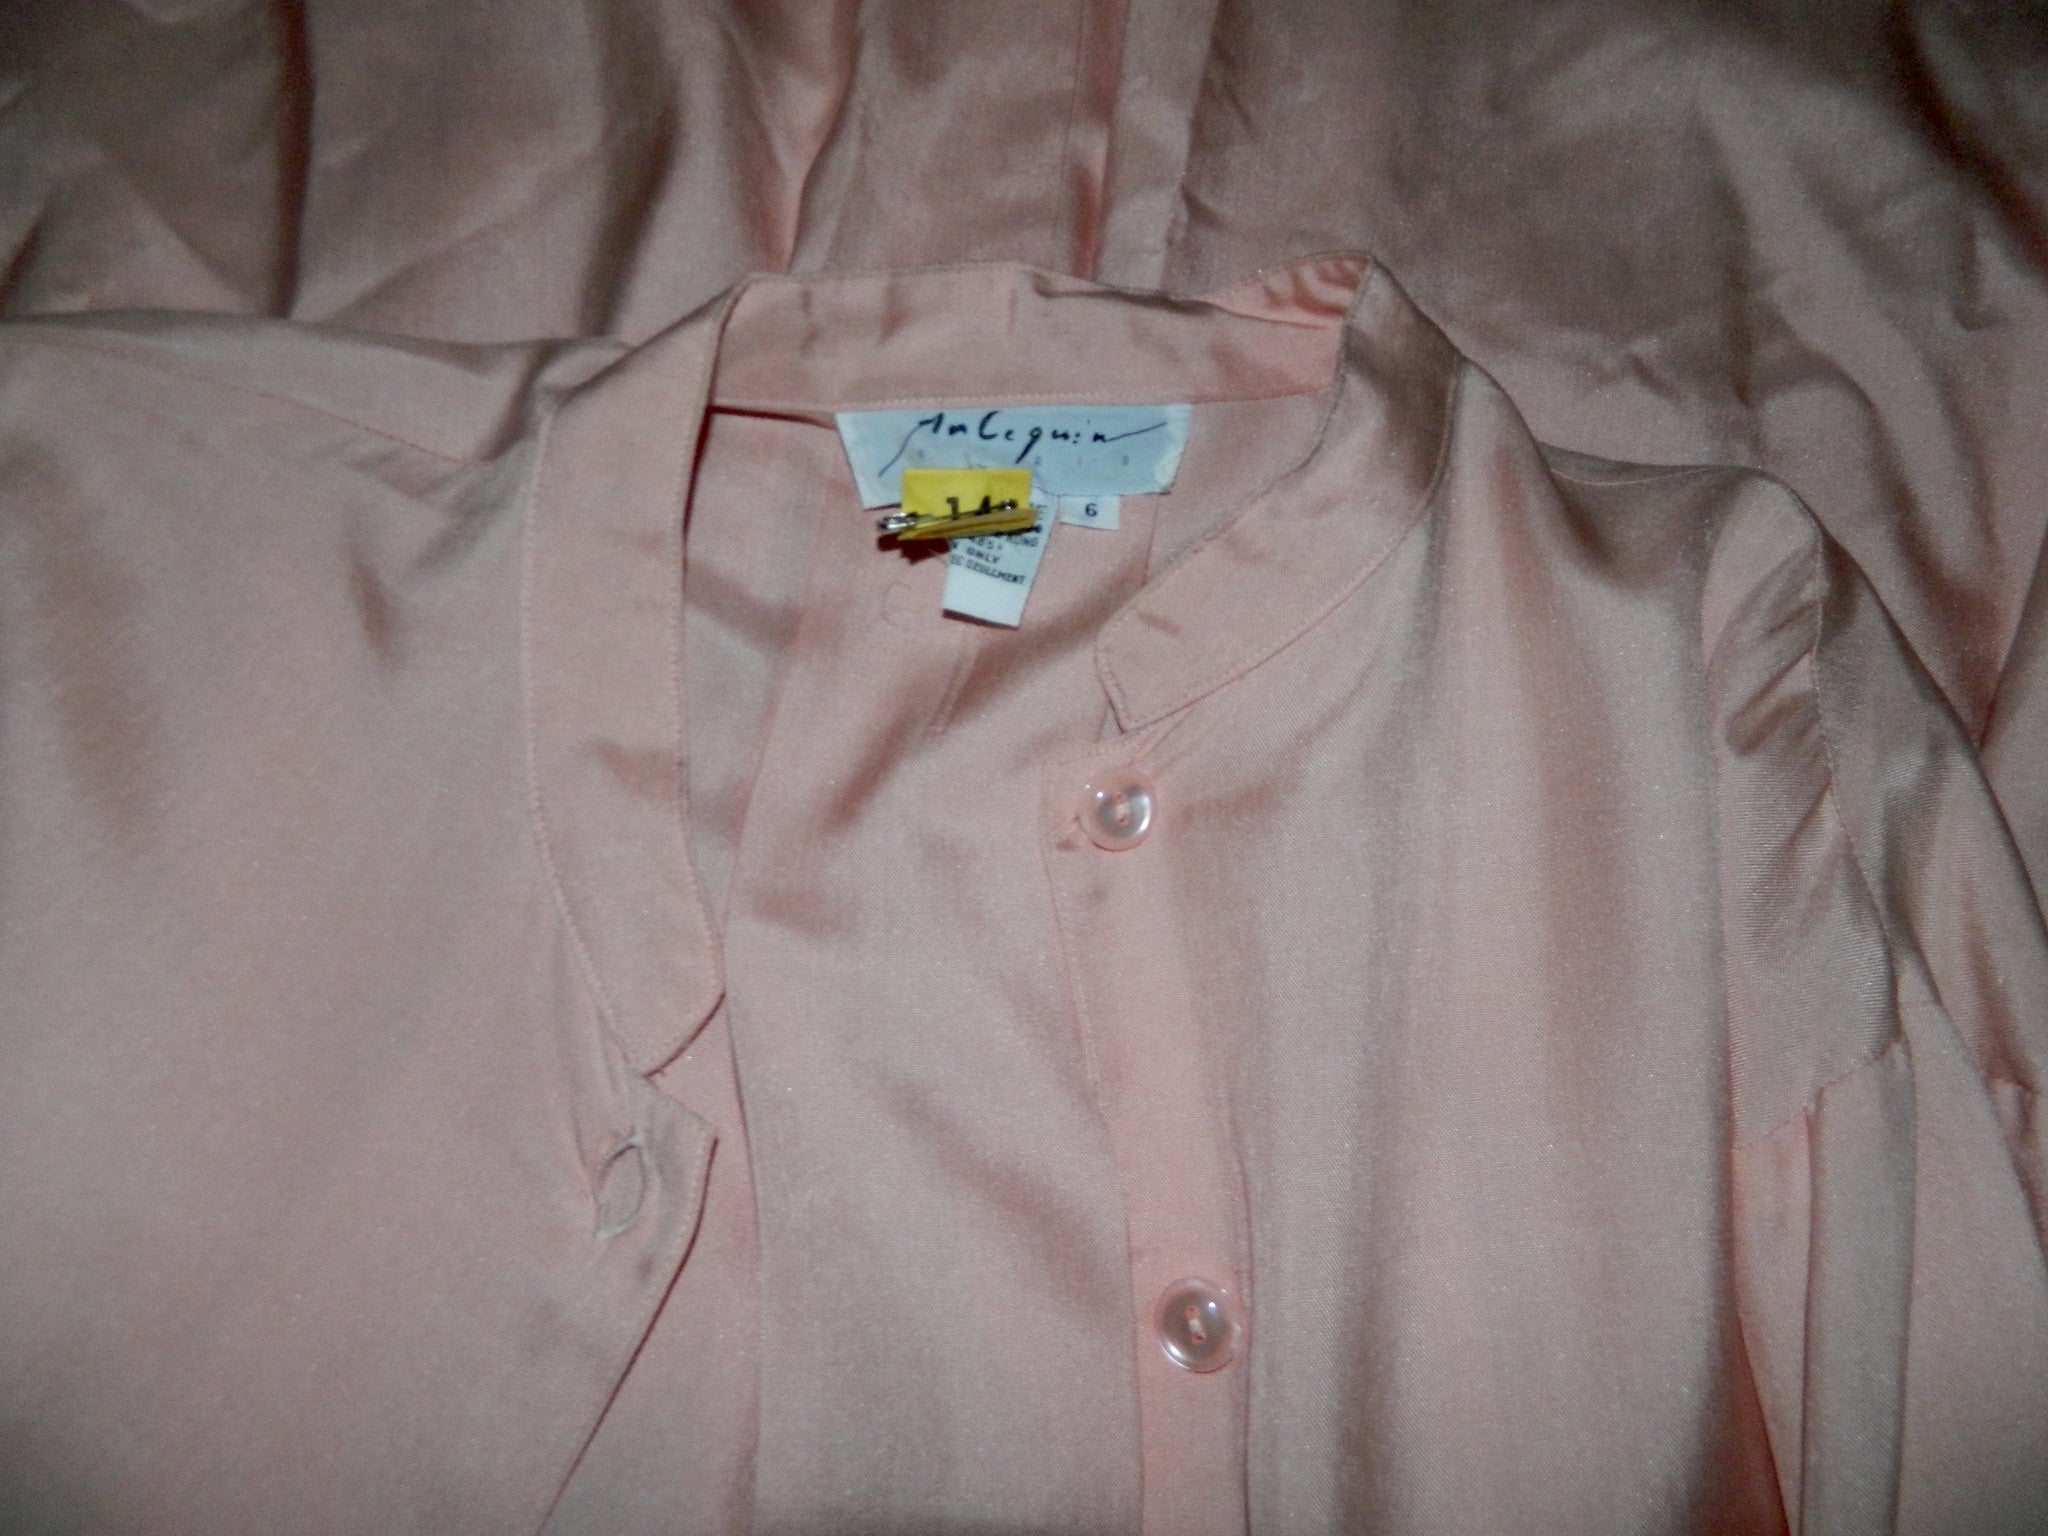 vintage silk dress / 1980s pink Arlequin PARIS drop waist shirtdress OS